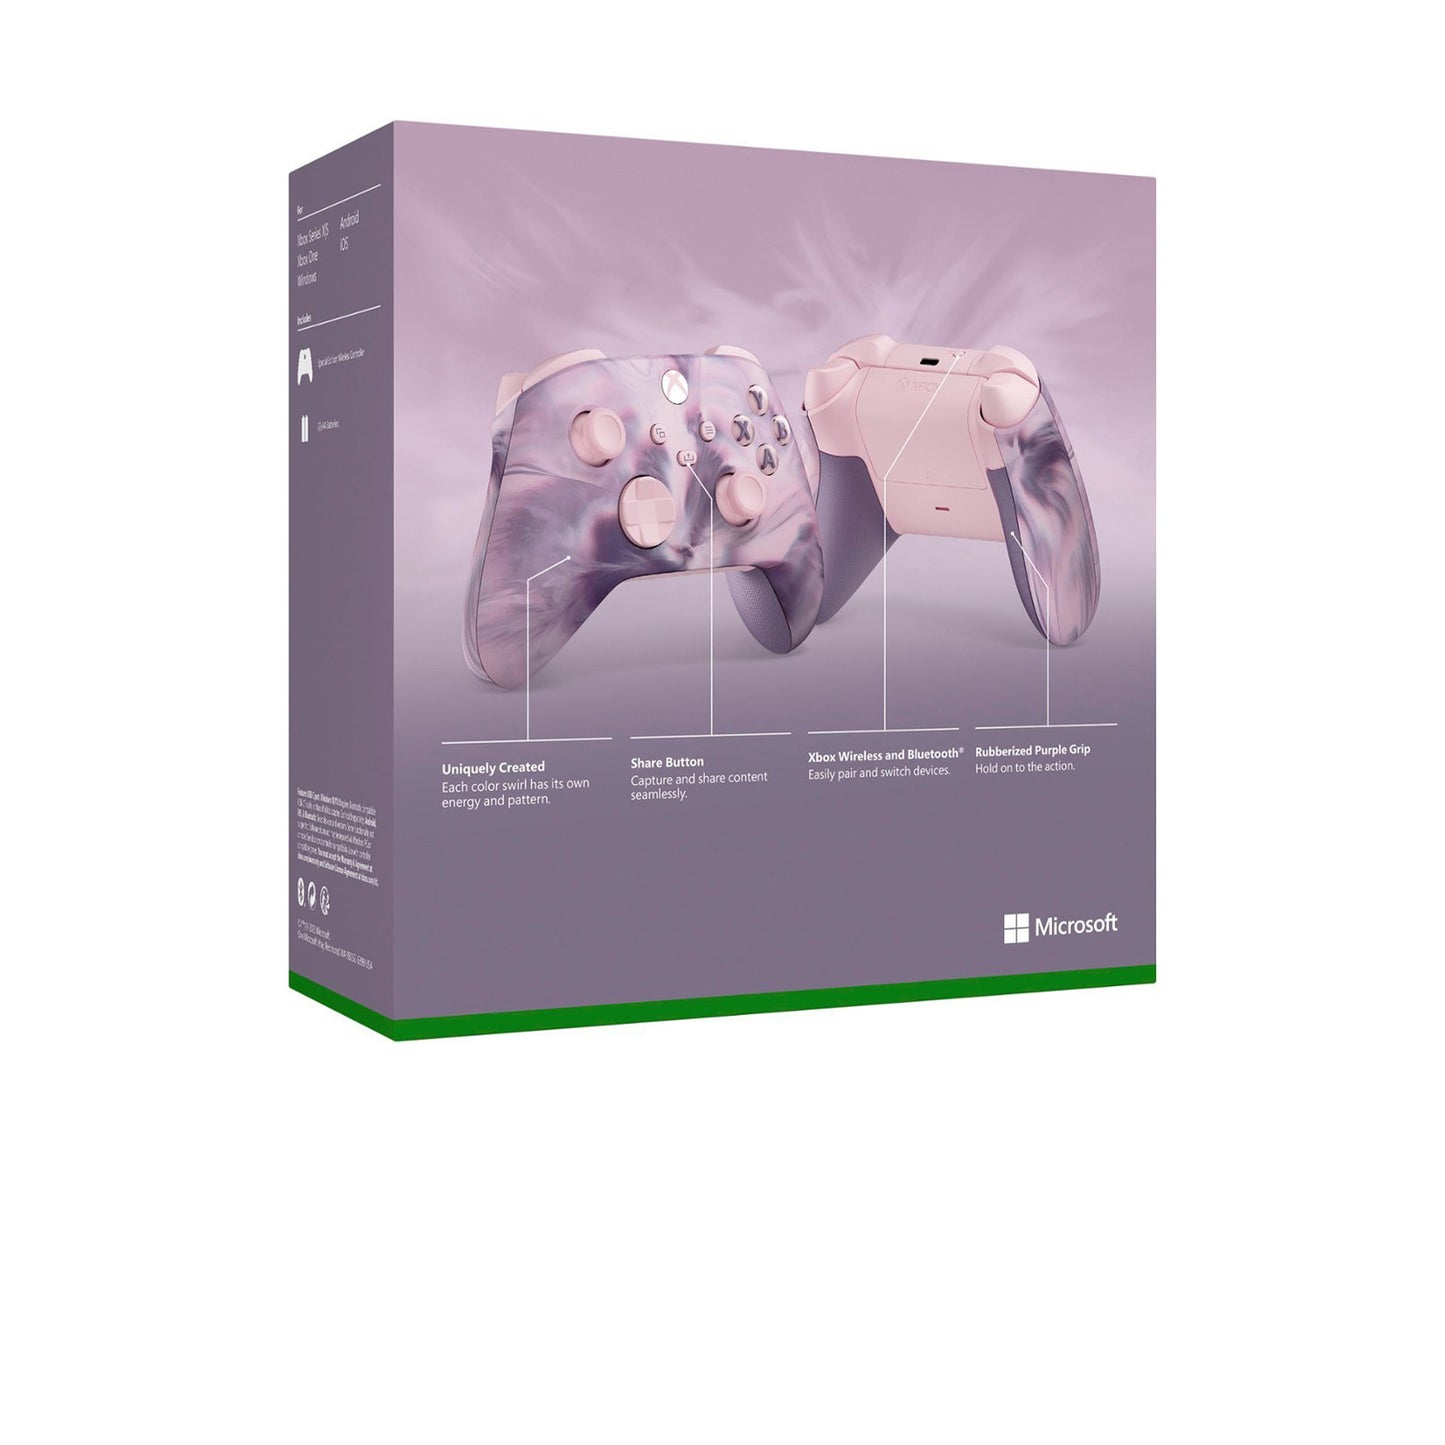 Microsoft - وحدة تحكم Xbox اللاسلكية لأجهزة Xbox Series X وXbox Series S وXbox One وأجهزة Windows - إصدار Dream Vapor الخاص 